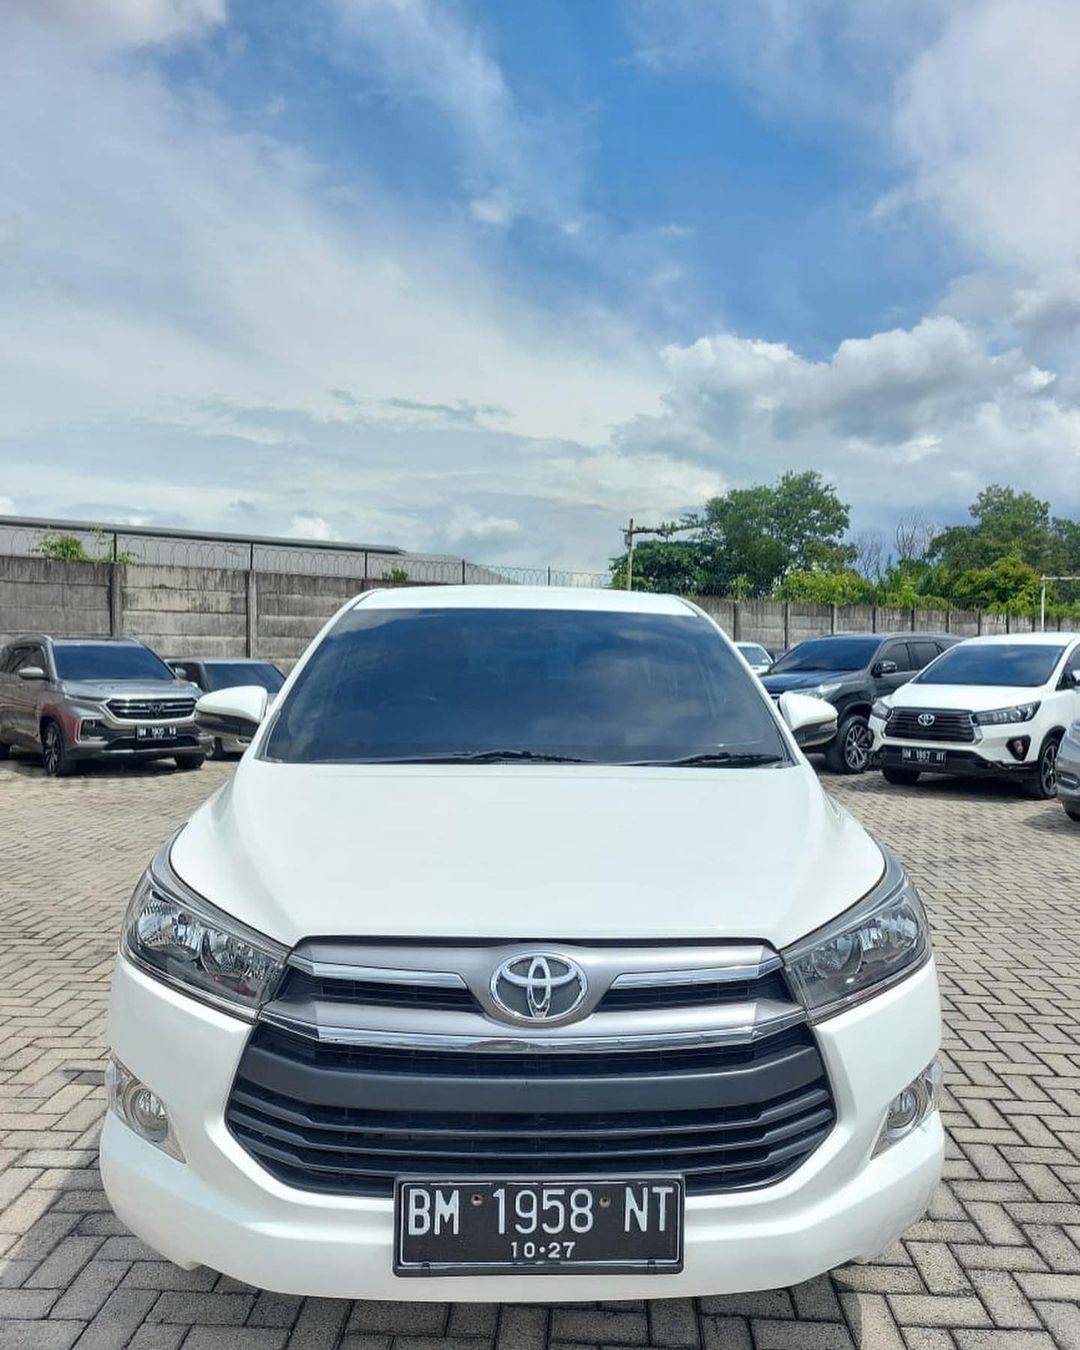 2017 Toyota Kijang Innova Bekas